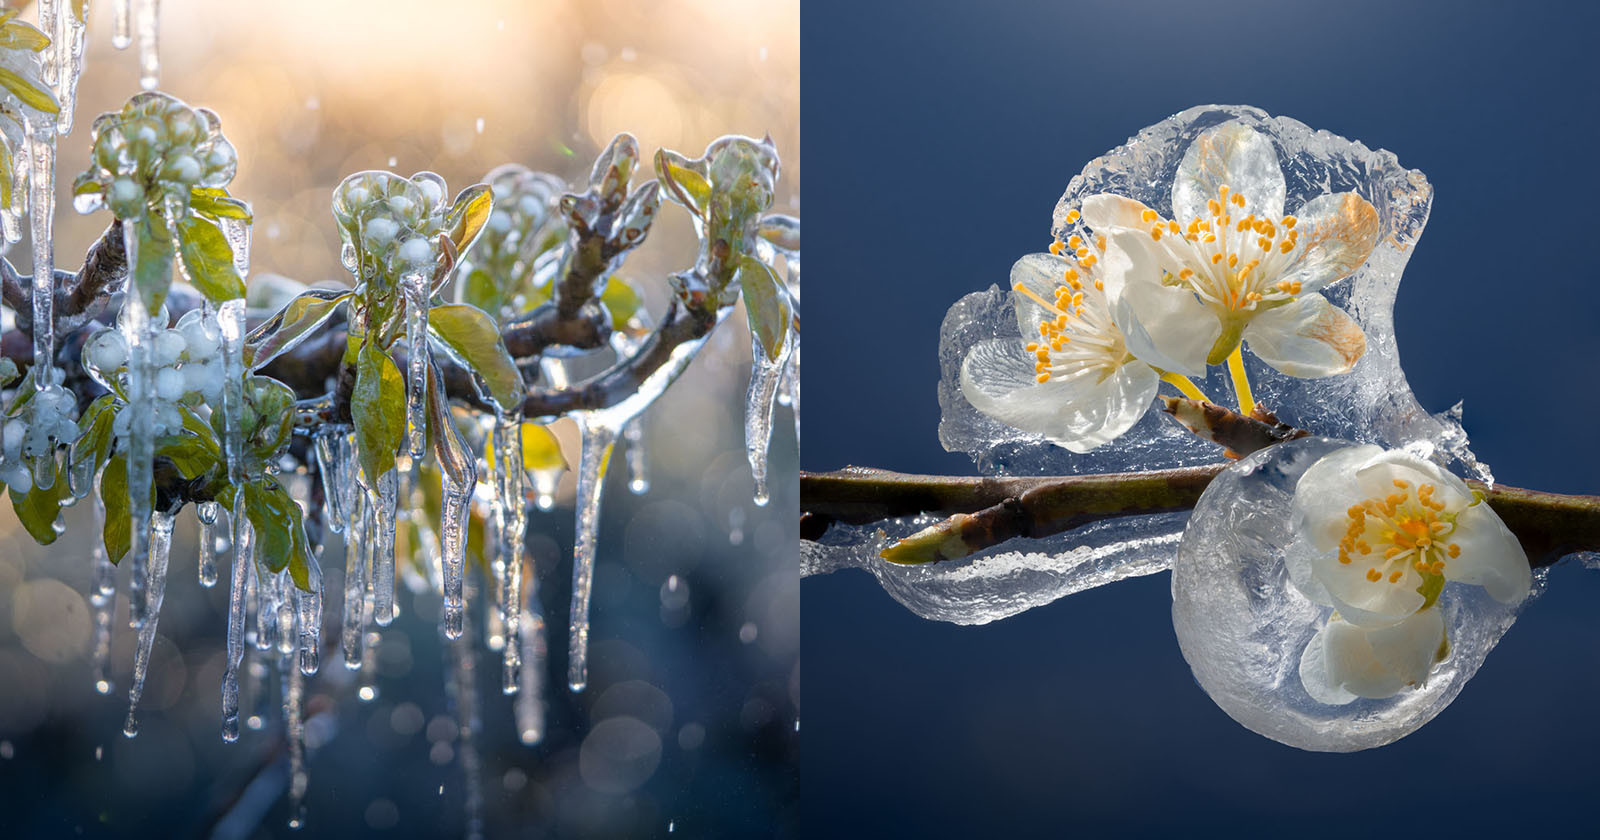  closeup photos frozen flowers fruit trees 